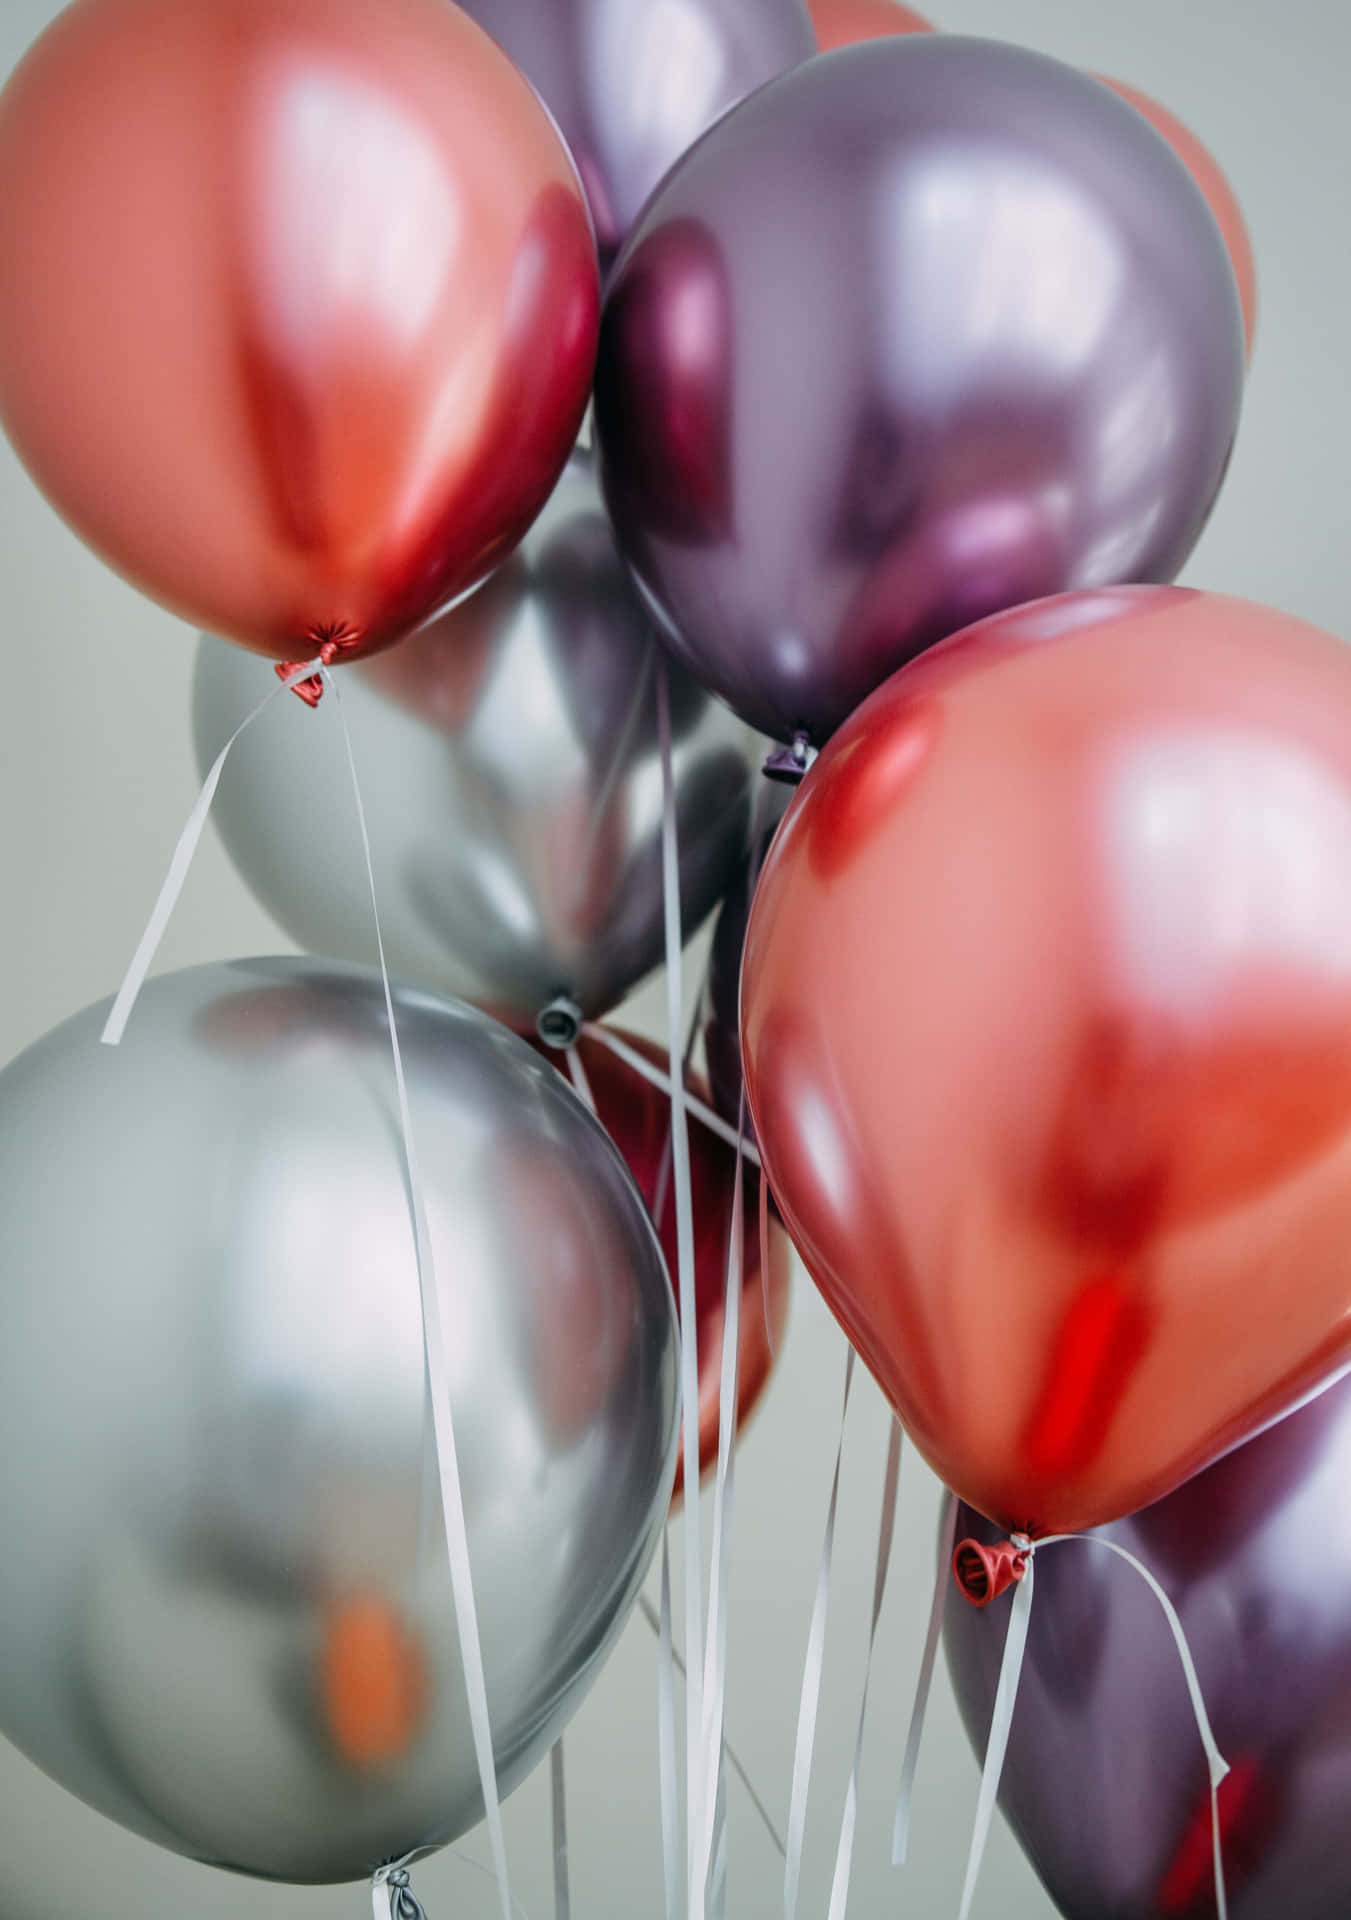 Colorful Celebration - Birthday Balloons Background